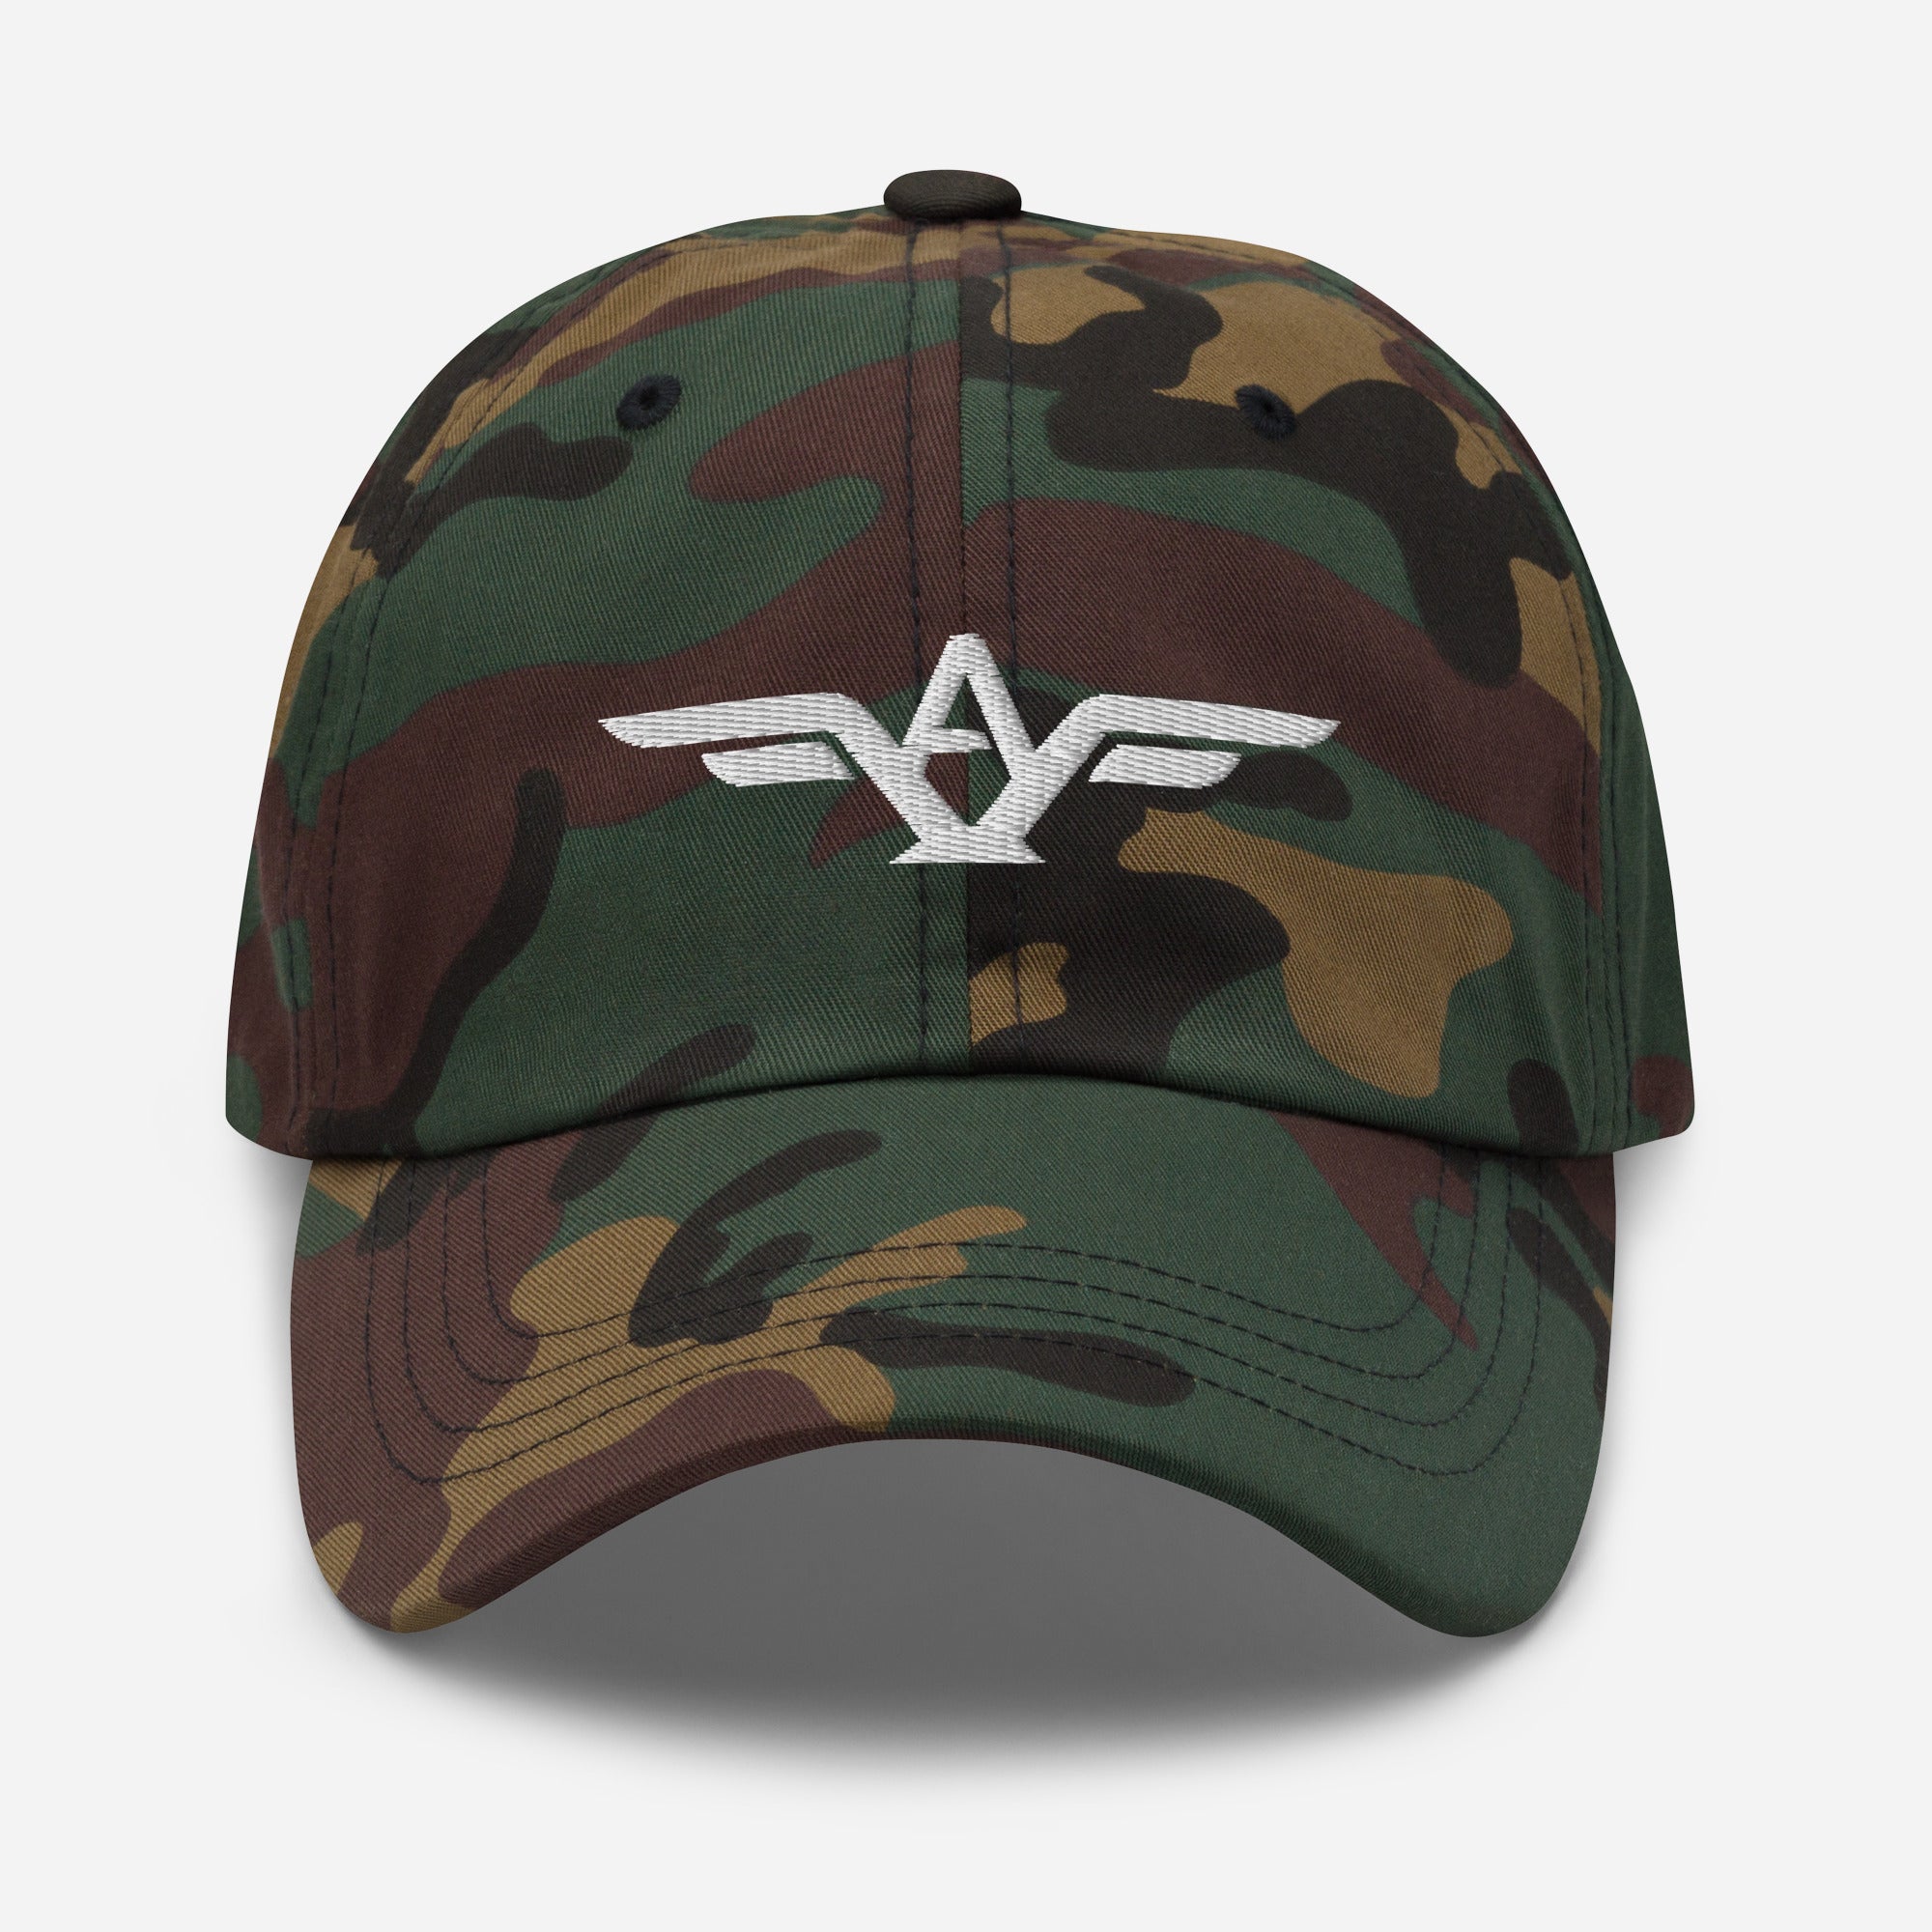 Aviator Icon Hat